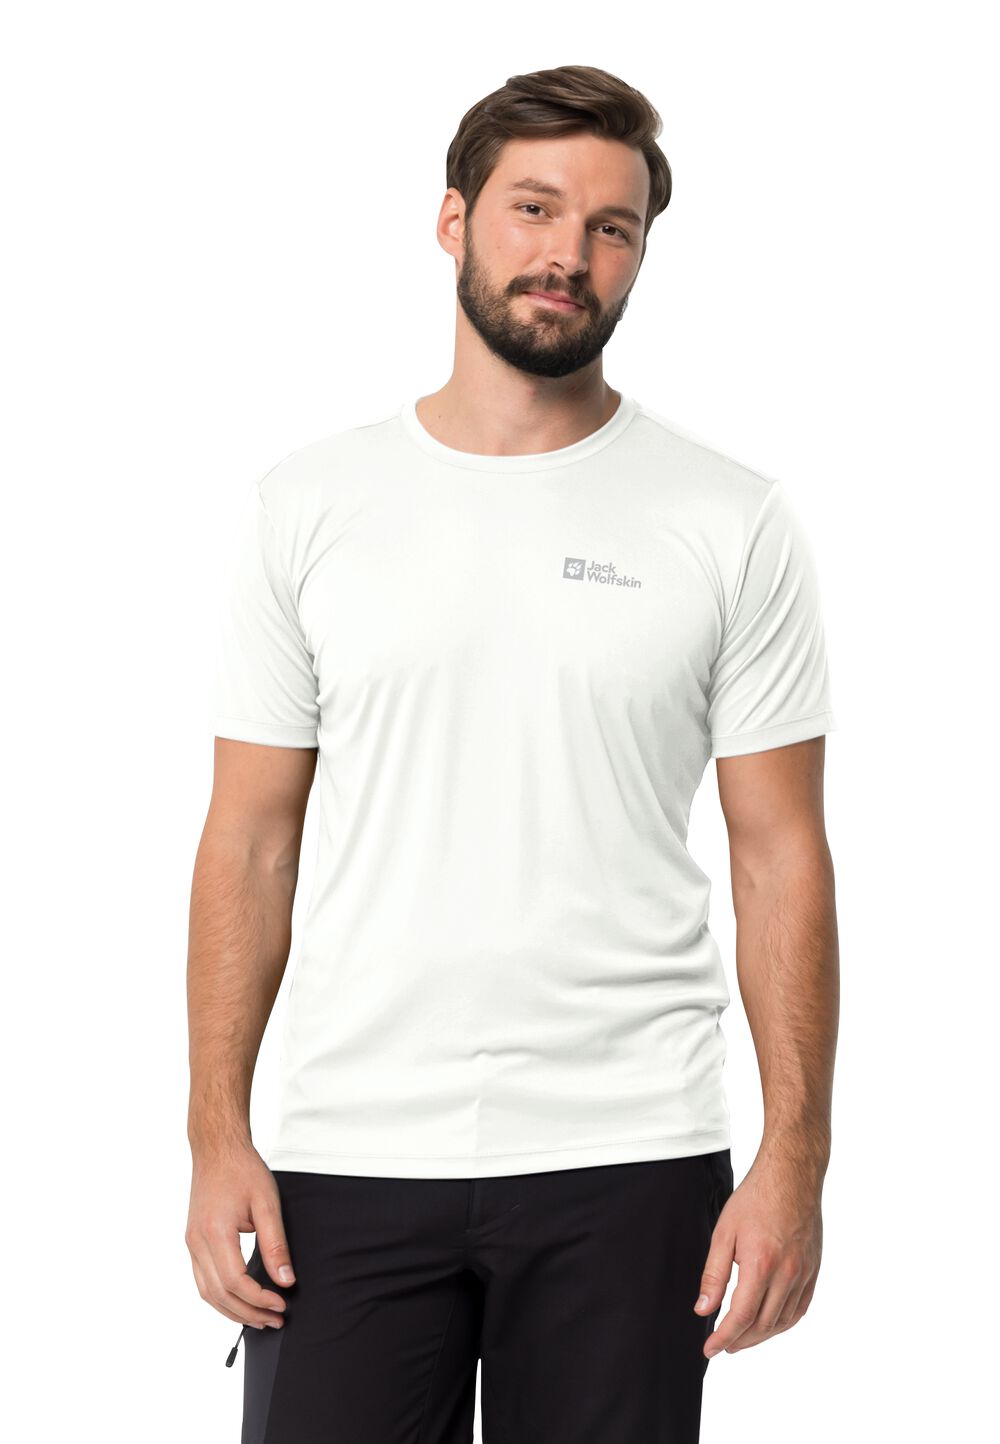 Jack Wolfskin Tech T-Shirt Men Functioneel shirt Heren XXL wit stark white